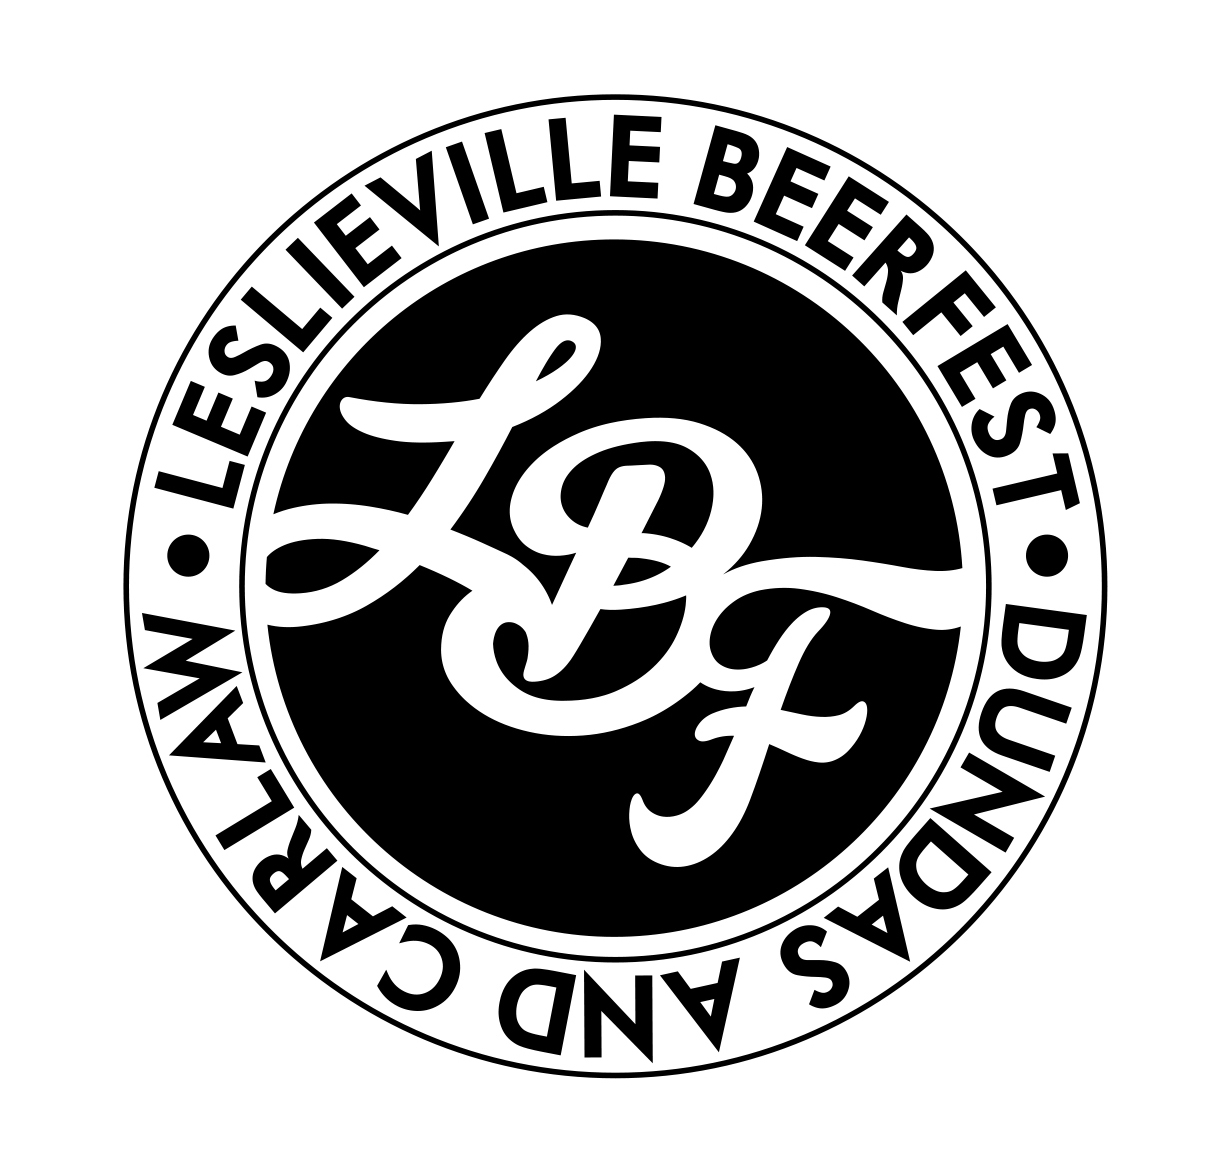 Leslieville beer festival